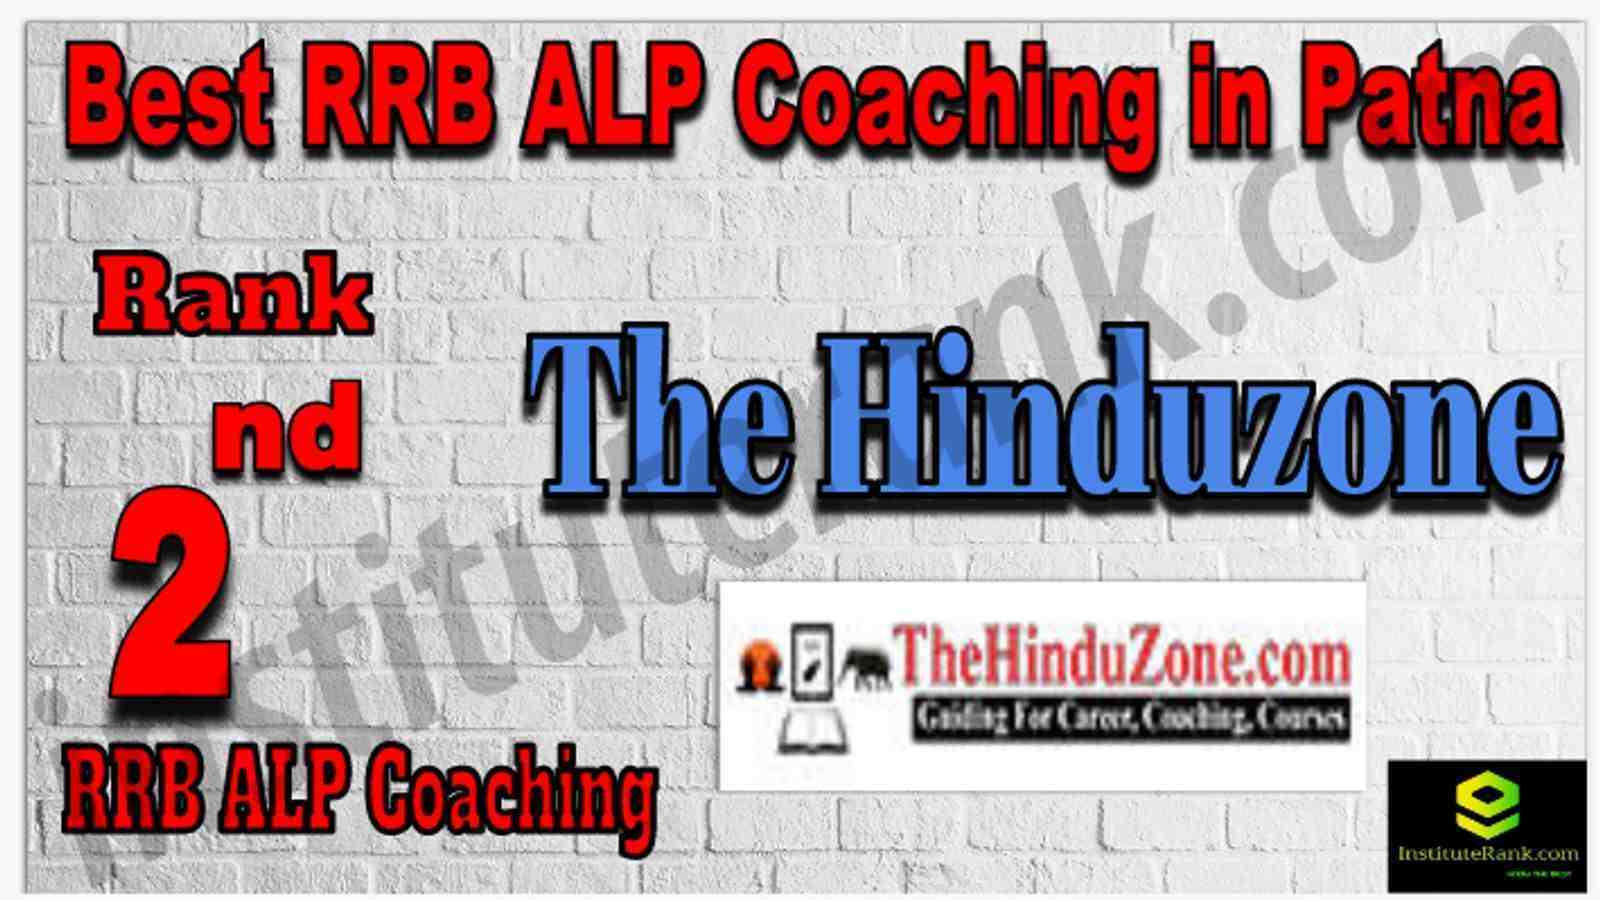 Rank 2nd RRB ALP Coaching in Patna